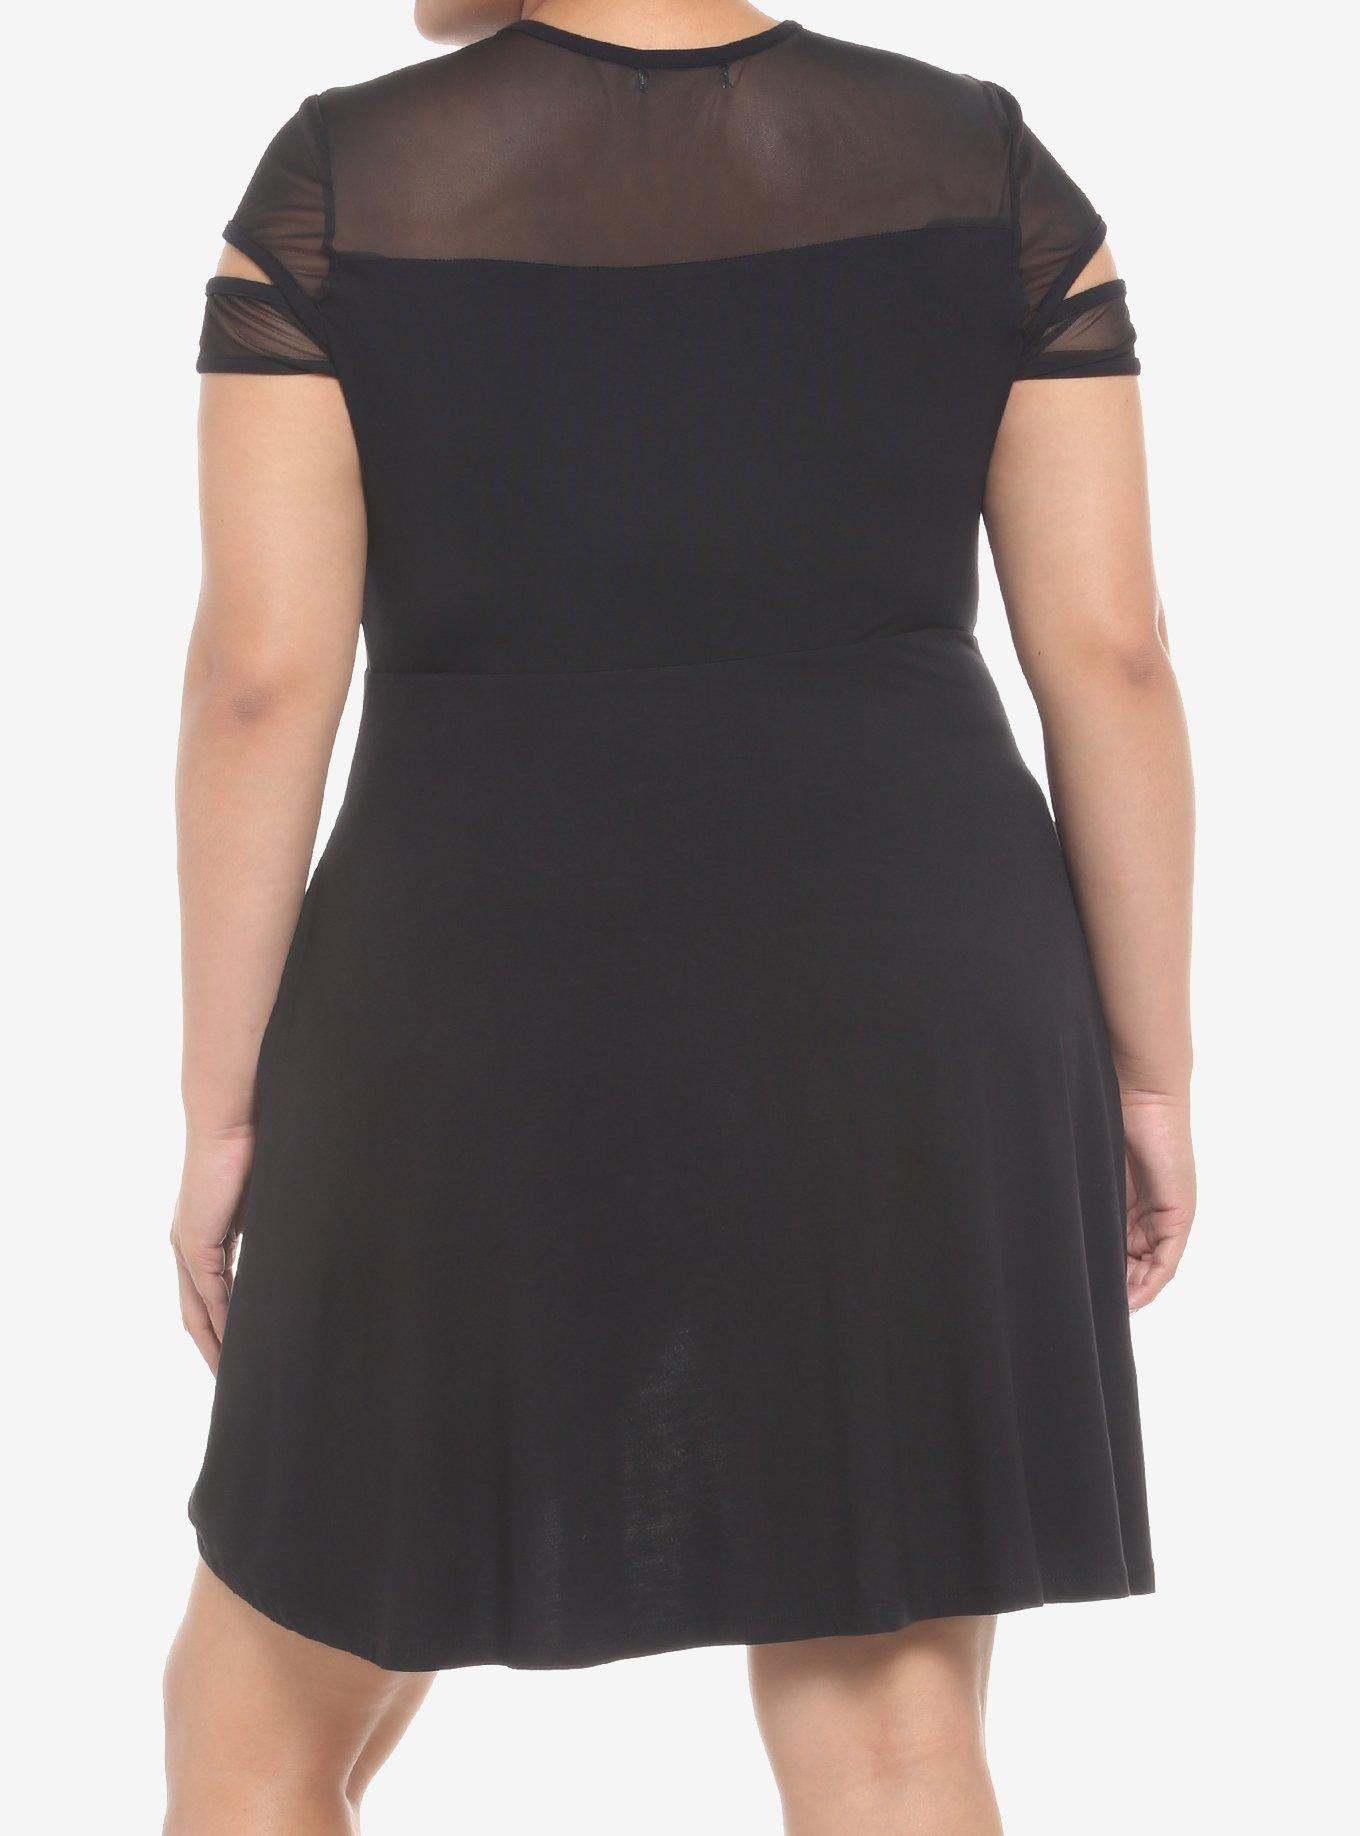 Black Fishnet Cutout Dress Plus Size, BLACK, alternate